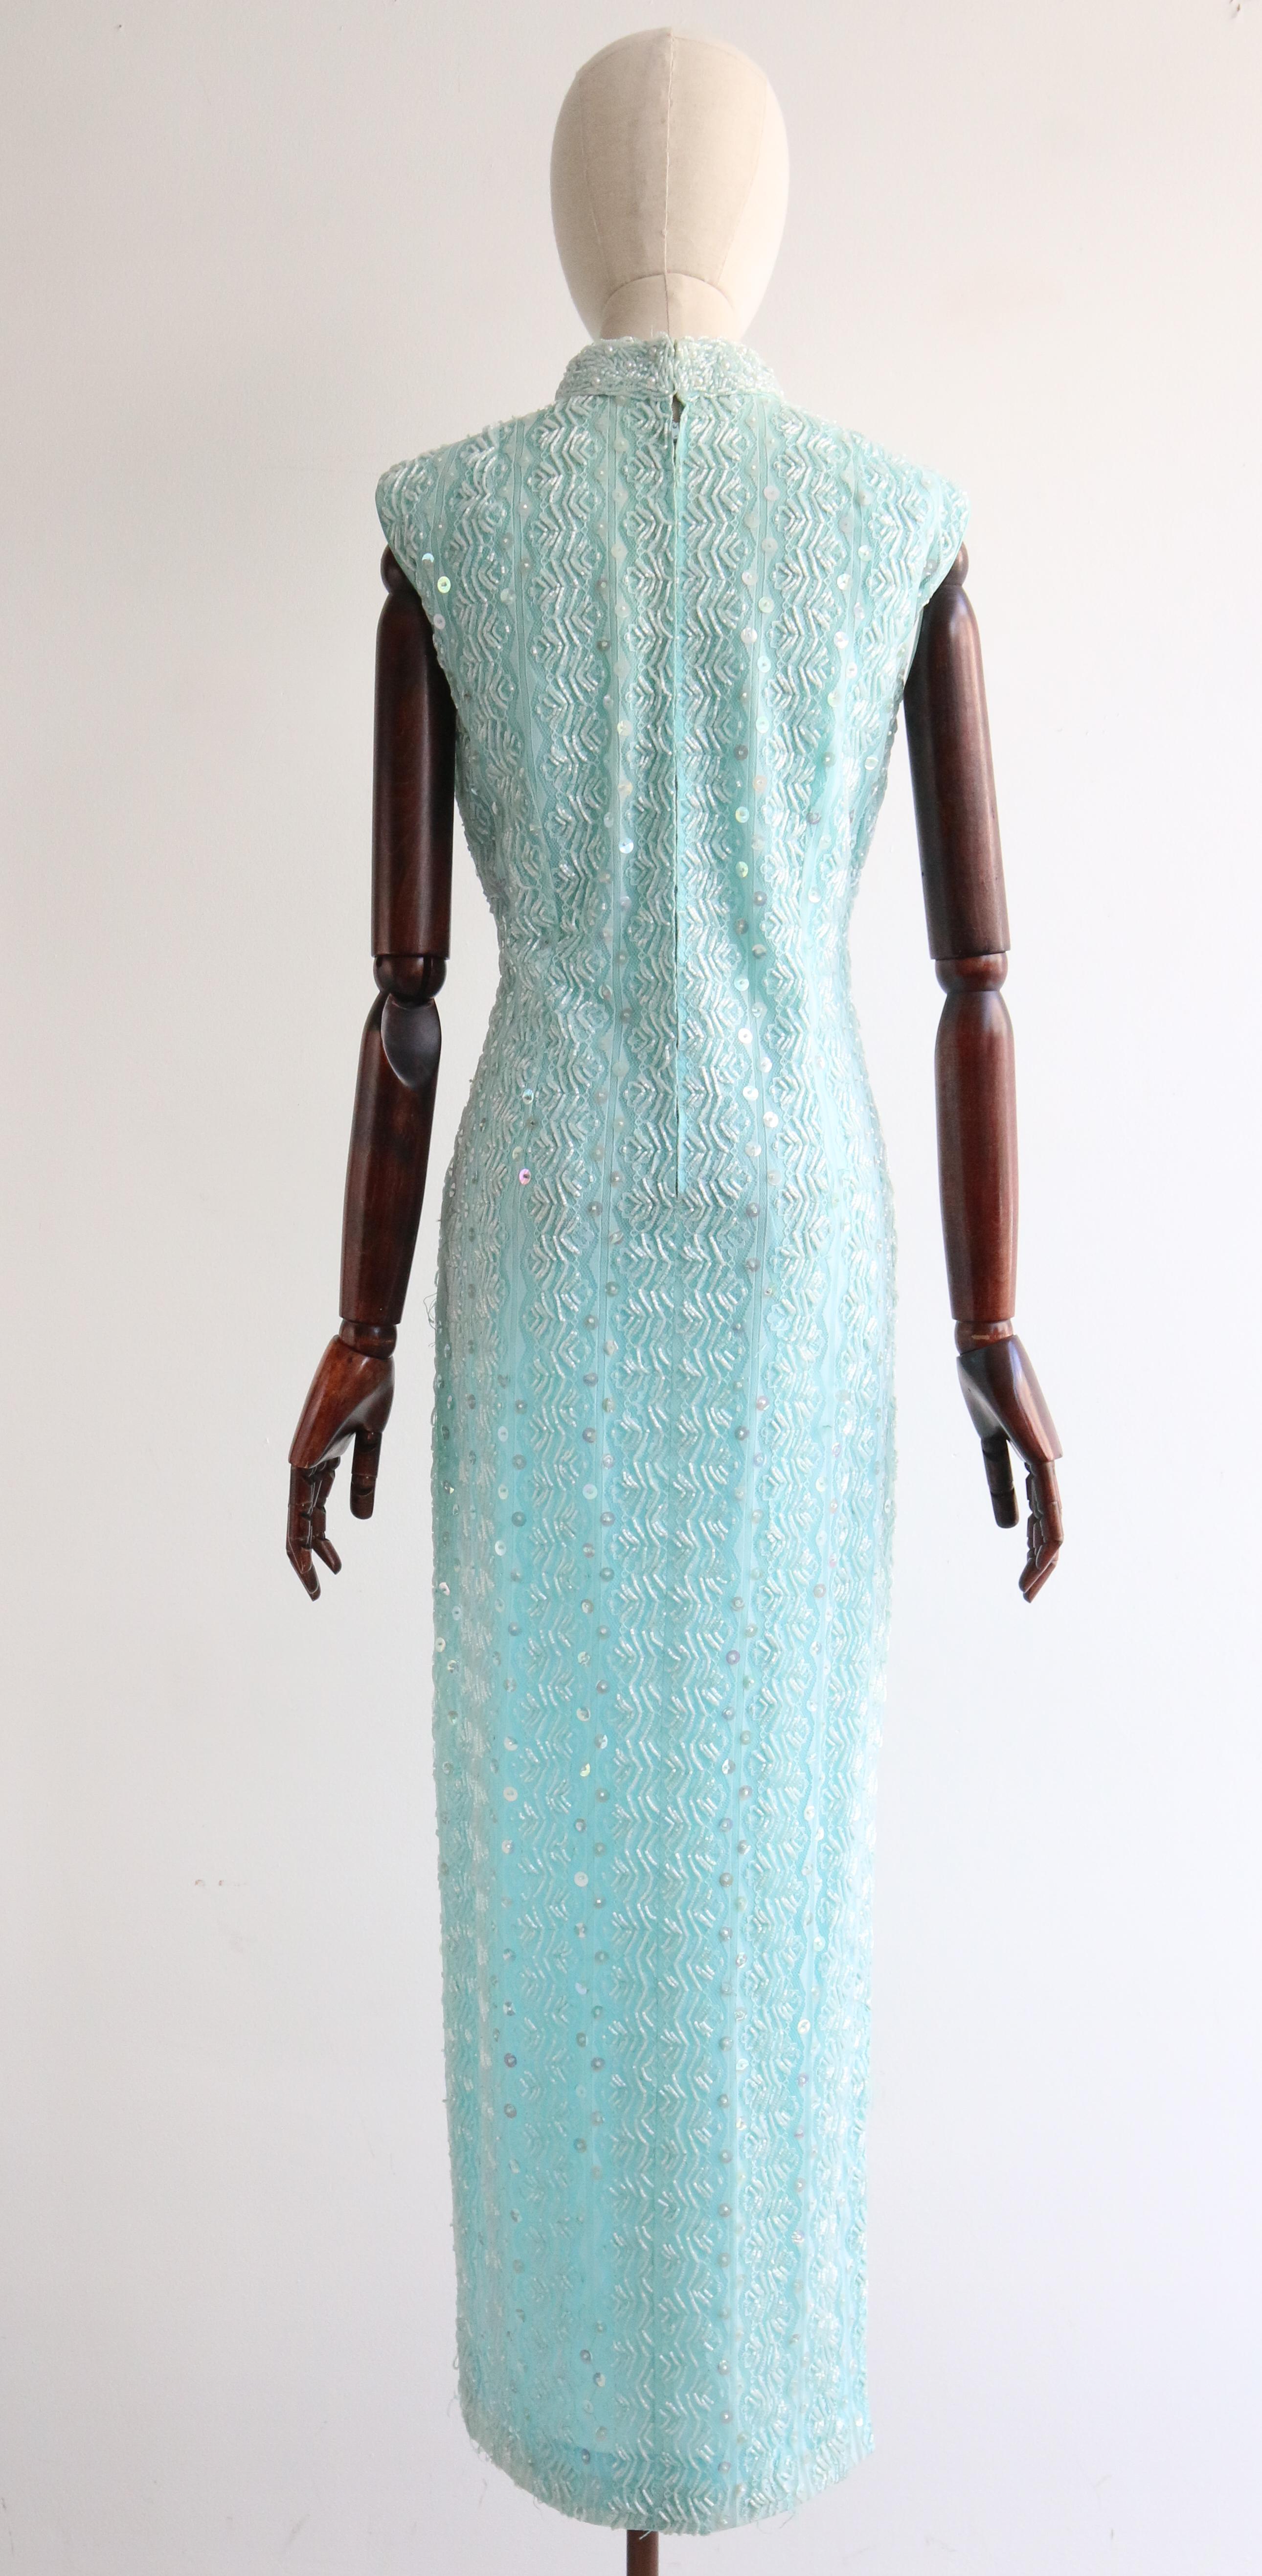 Vintage 1960's Aqua Beaded Lace Dress UK 10-12 US 6-8 For Sale 3